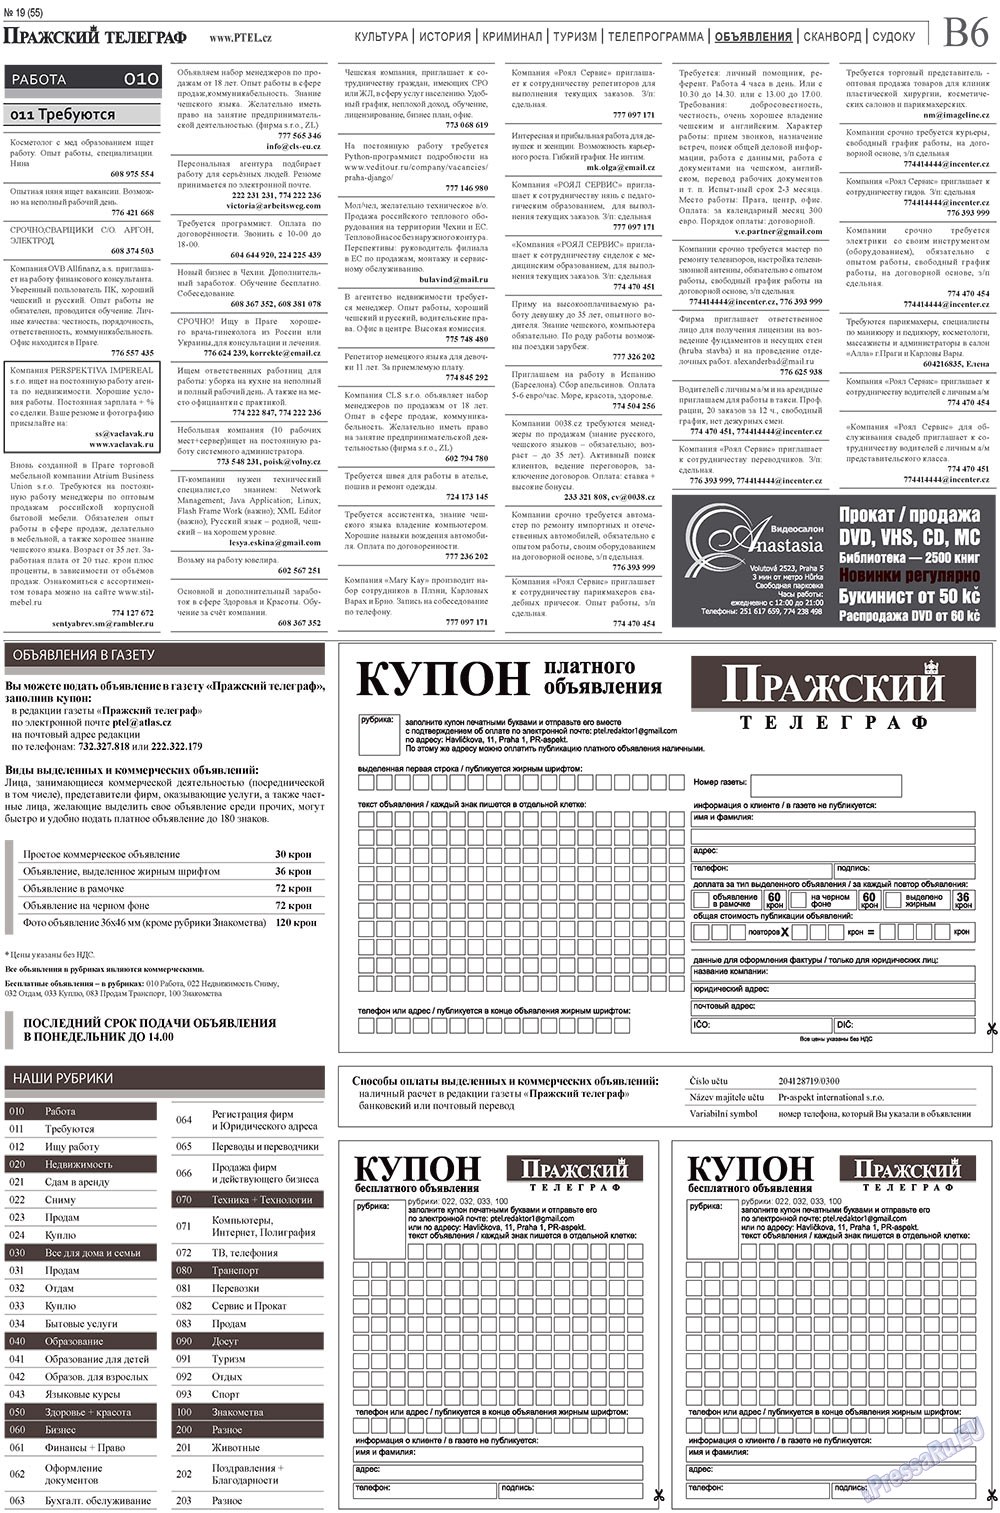 Пражский телеграф, газета. 2010 №19 стр.14